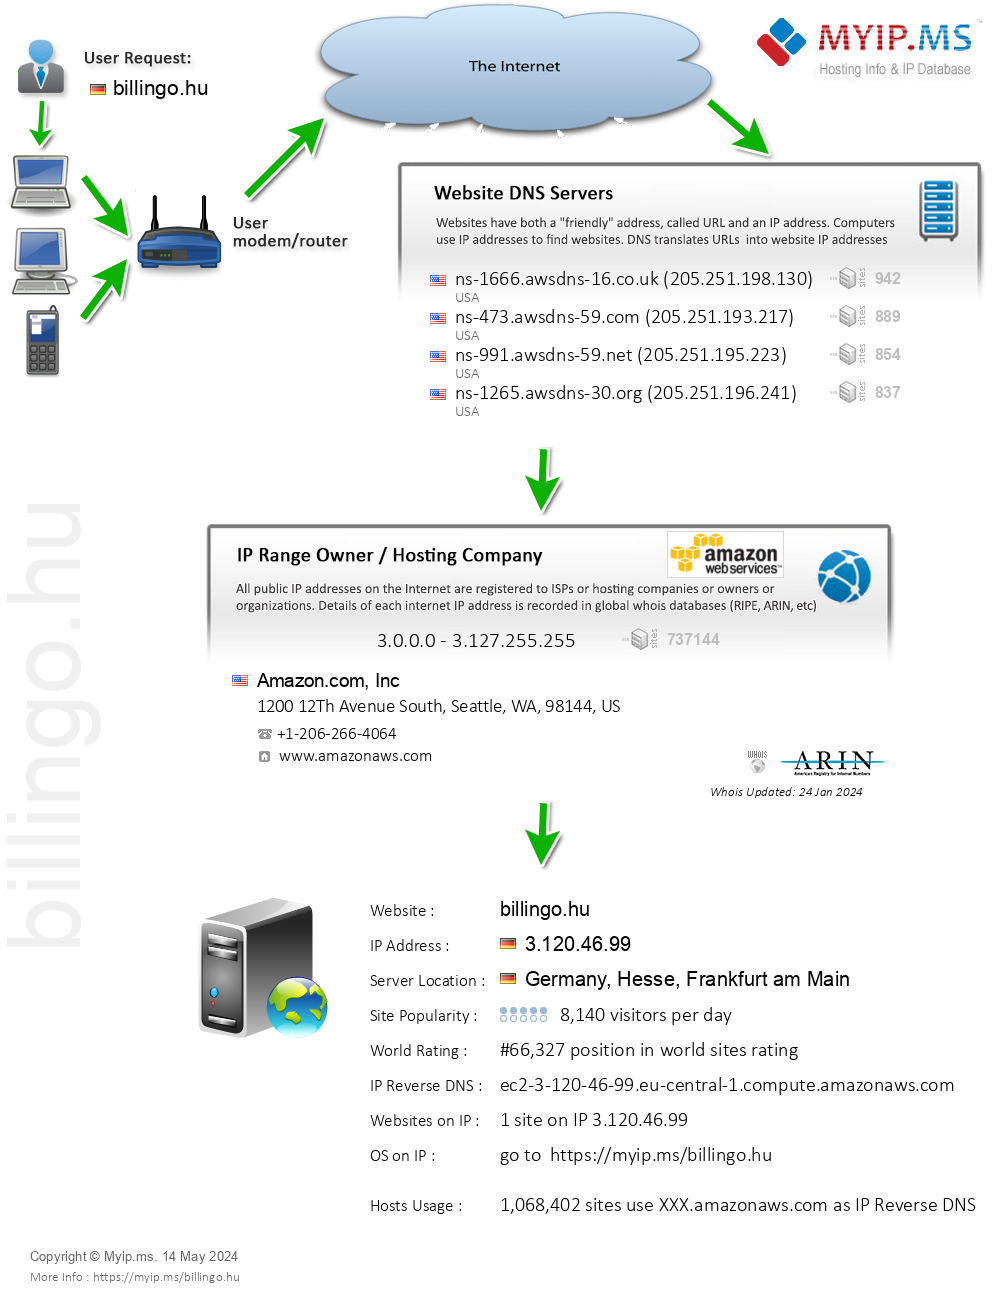 Billingo.hu - Website Hosting Visual IP Diagram